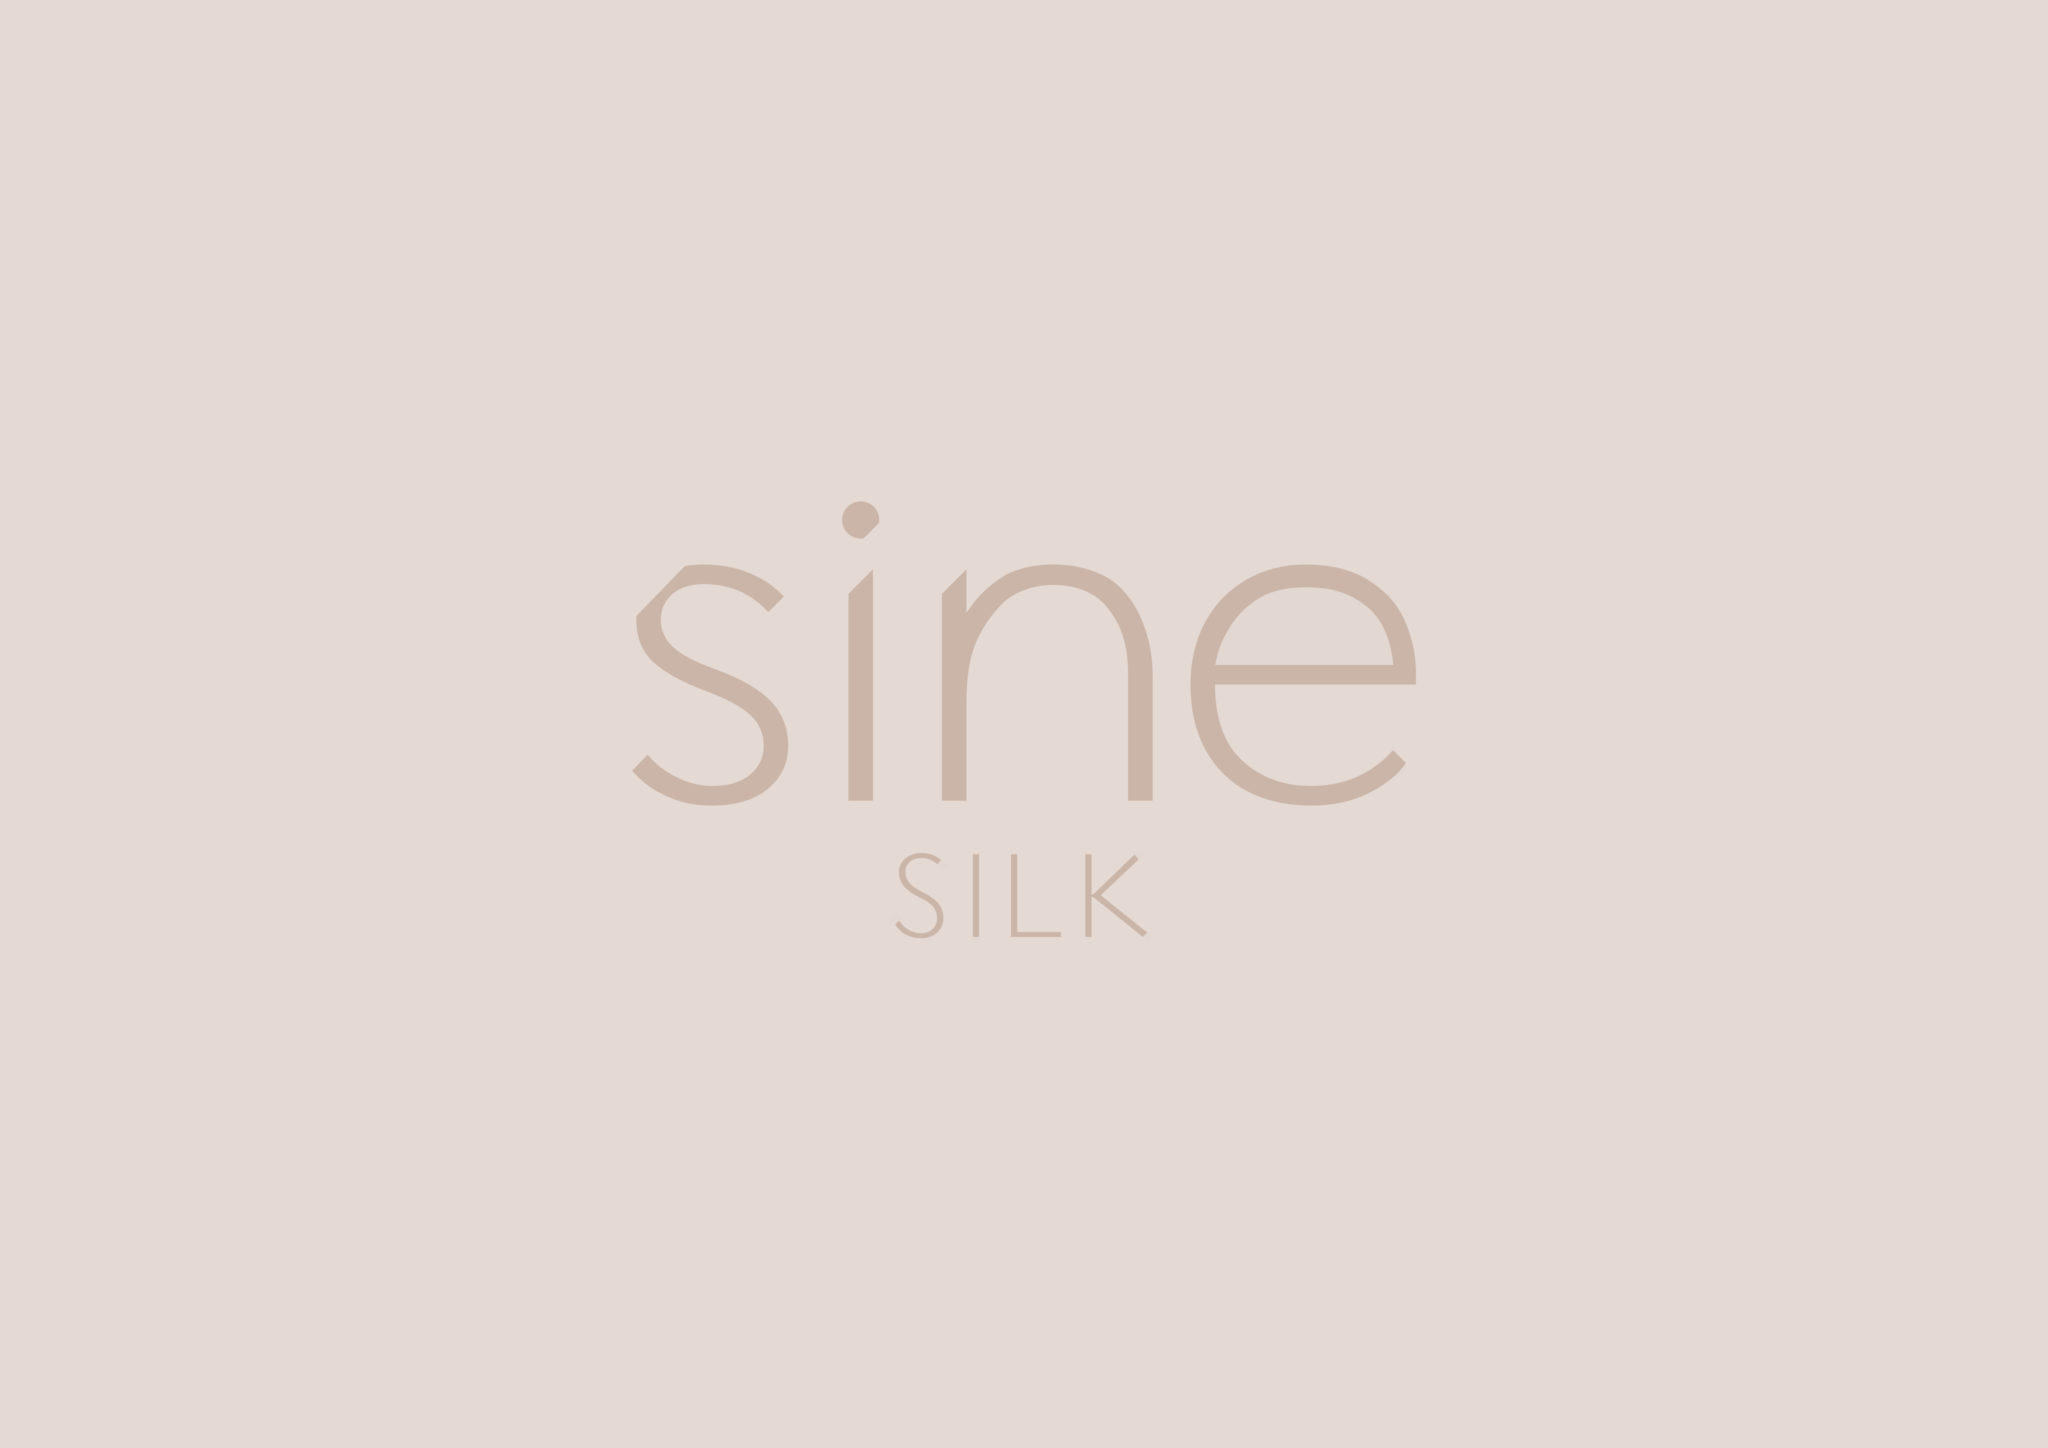 saint silk